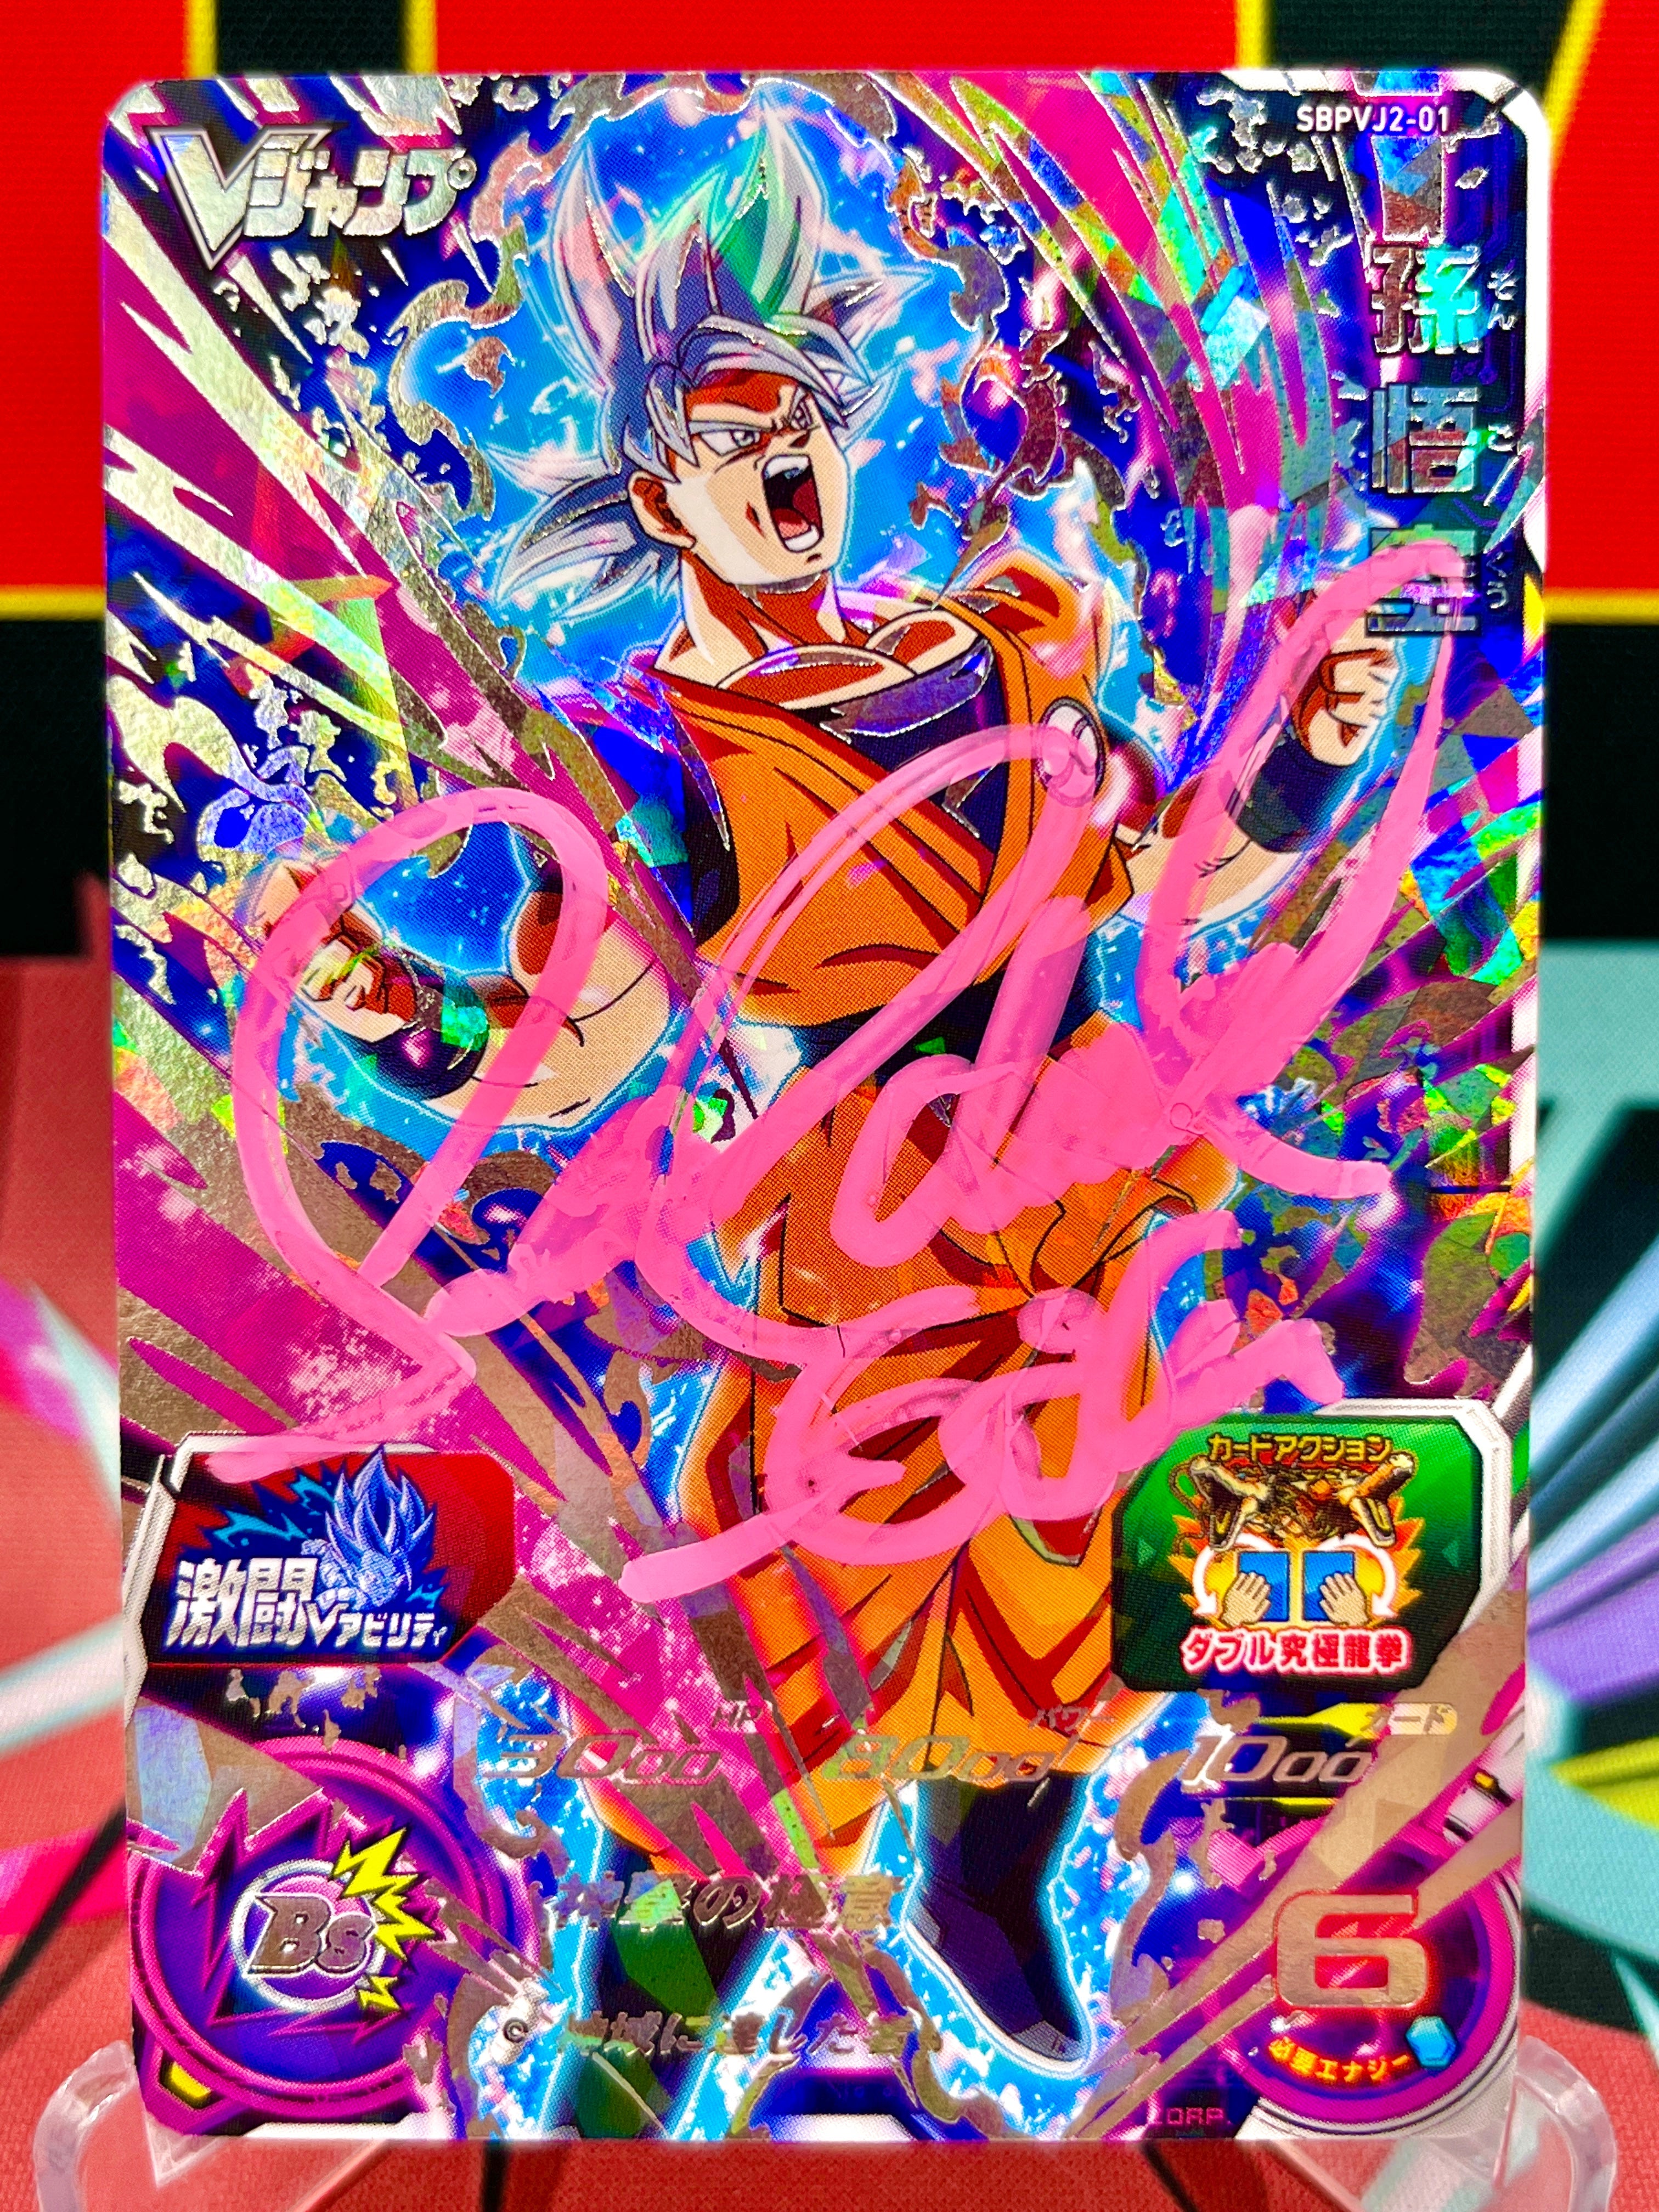 SBPVJ2-01 Son Goku (VJump) Promo (2021) Autographed by Sean Schemmel